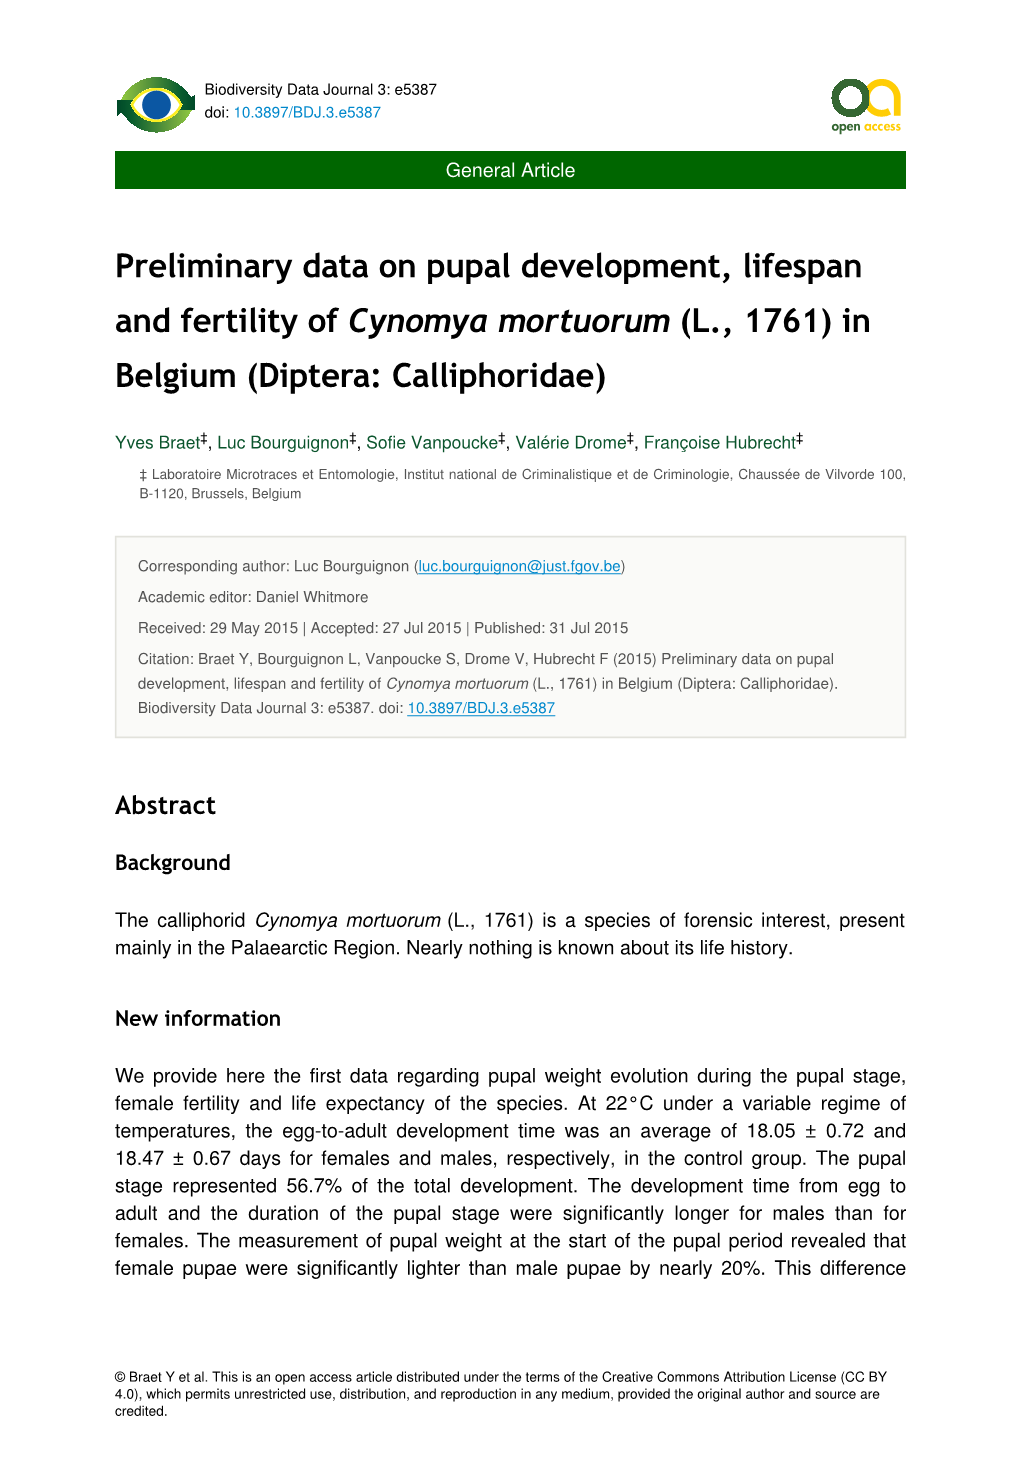 Preliminary Data on Pupal Development, Lifespan and Fertility of Cynomya Mortuorum (L., 1761) in Belgium (Diptera: Calliphoridae)